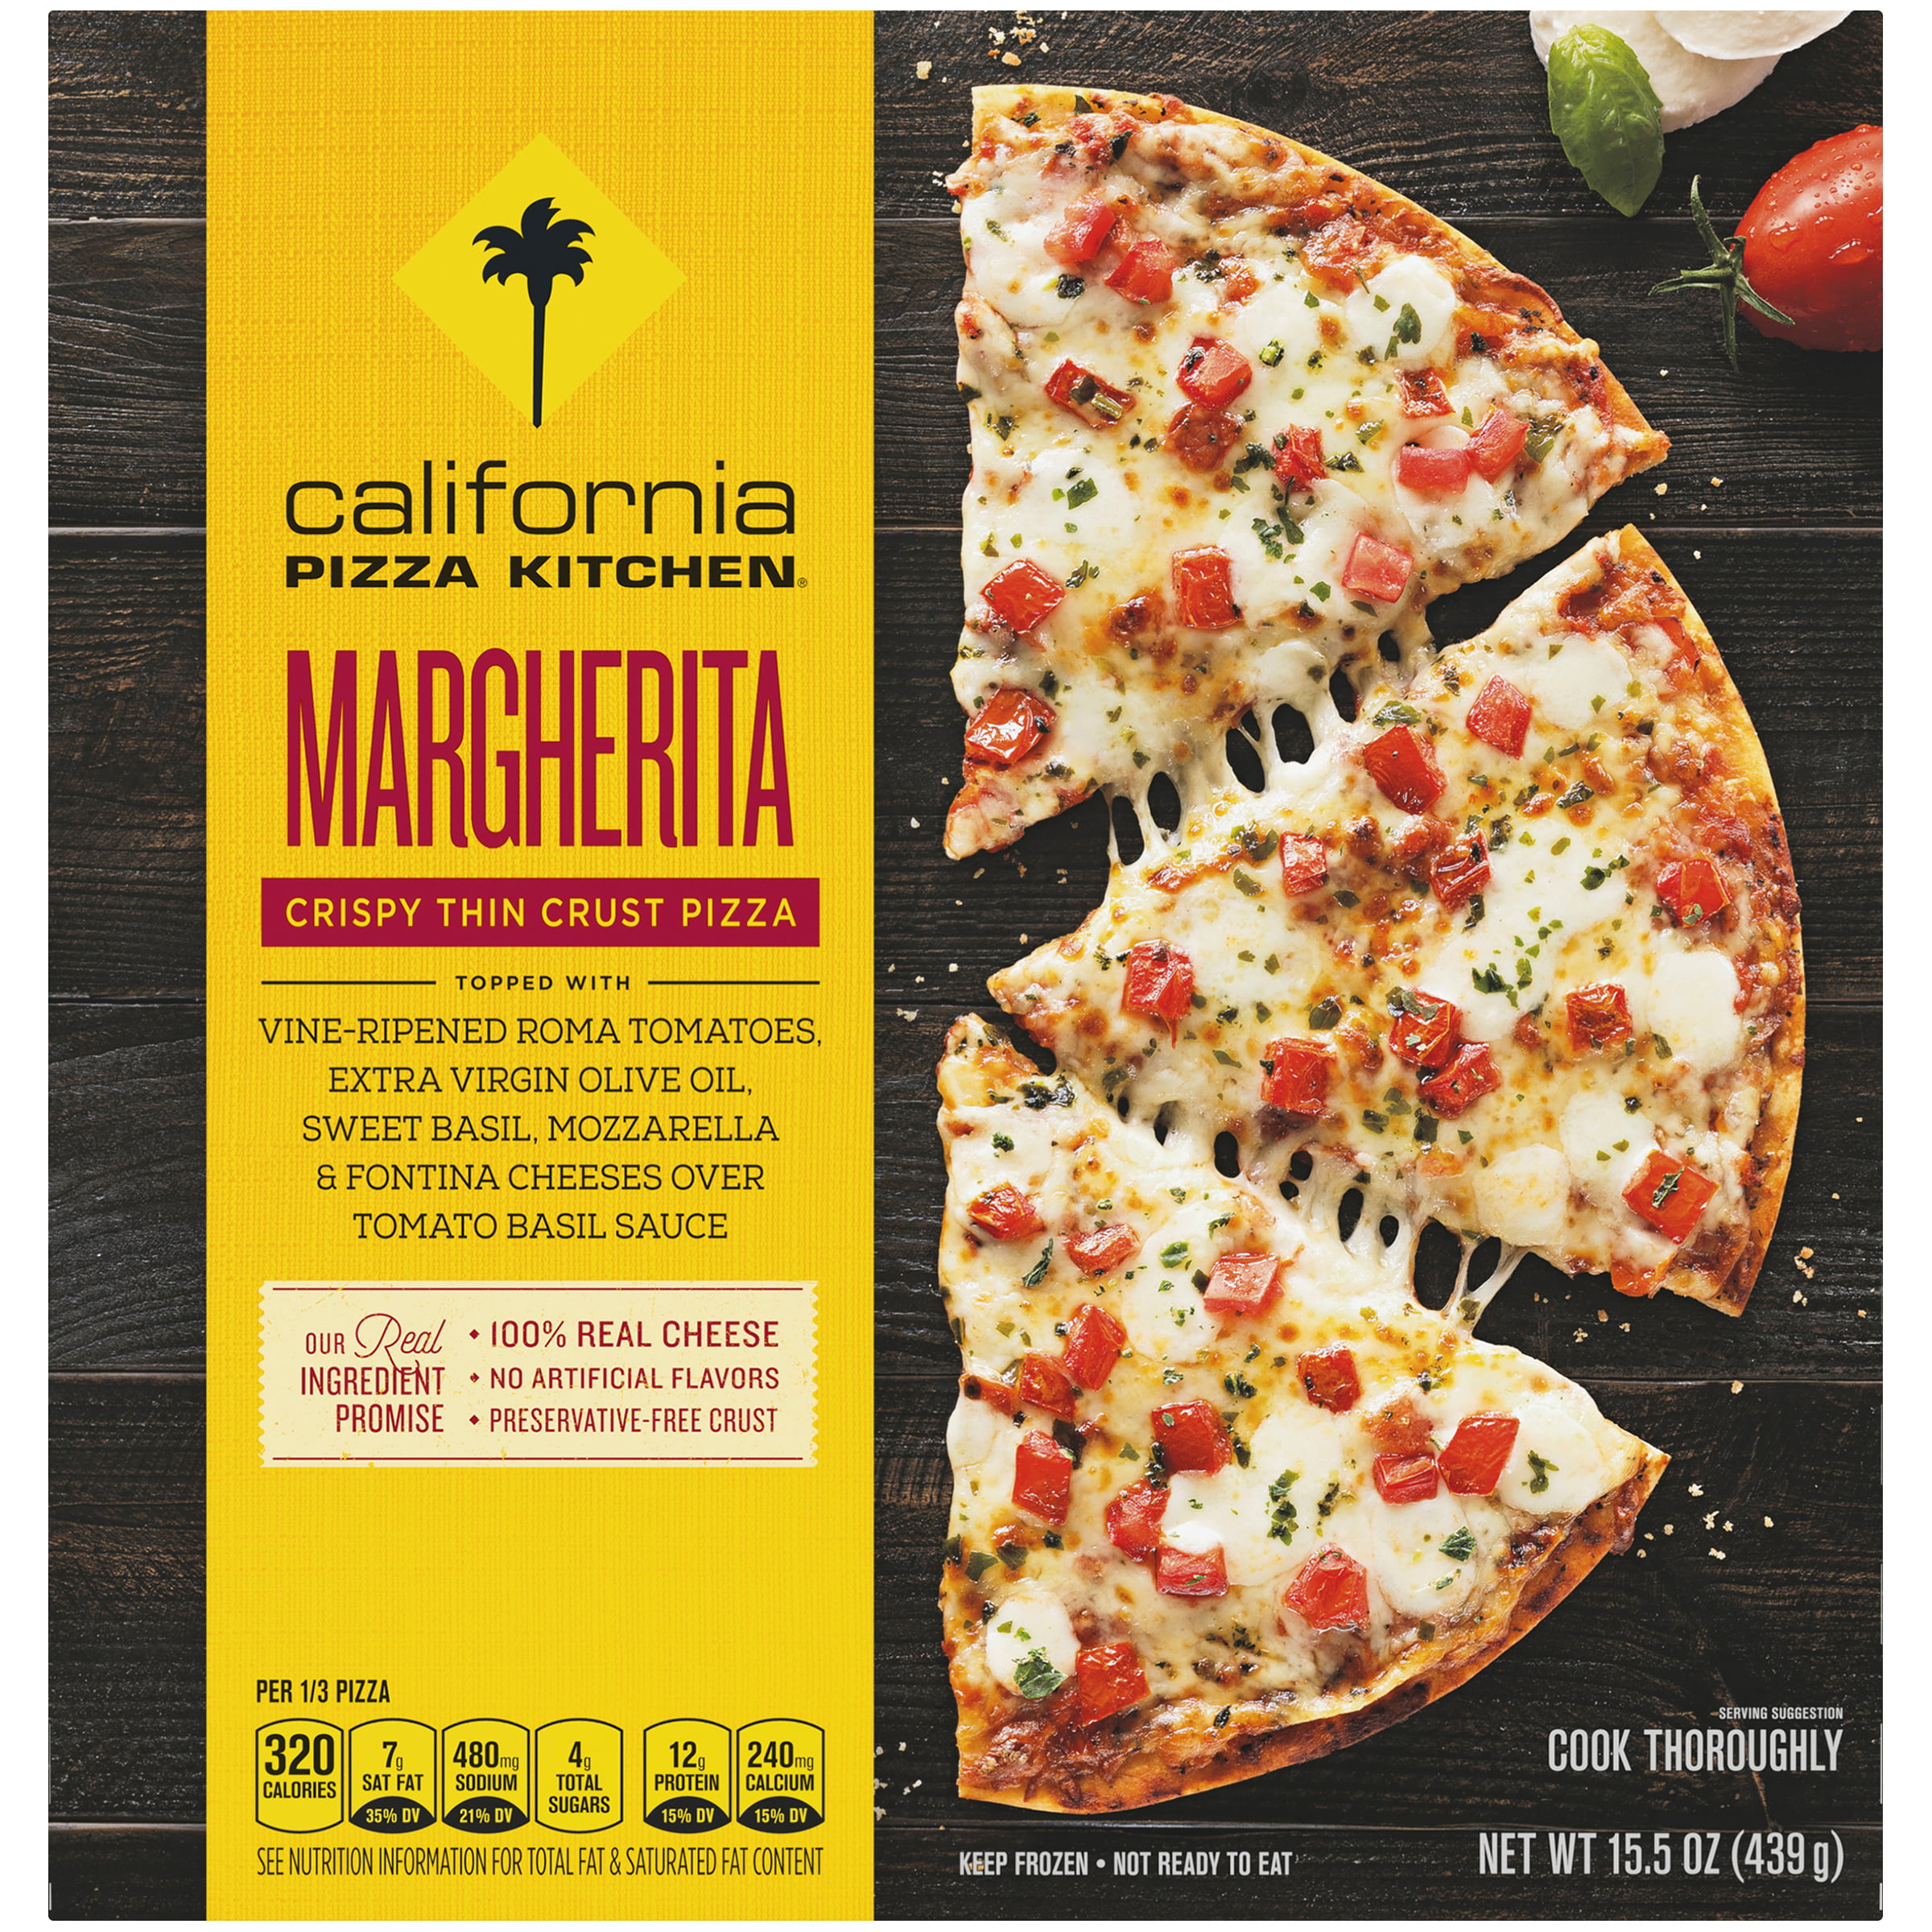 California Pizza Kitchen Margherita Crispy Thin Crust Frozen Pizza Walmartcom Walmartcom